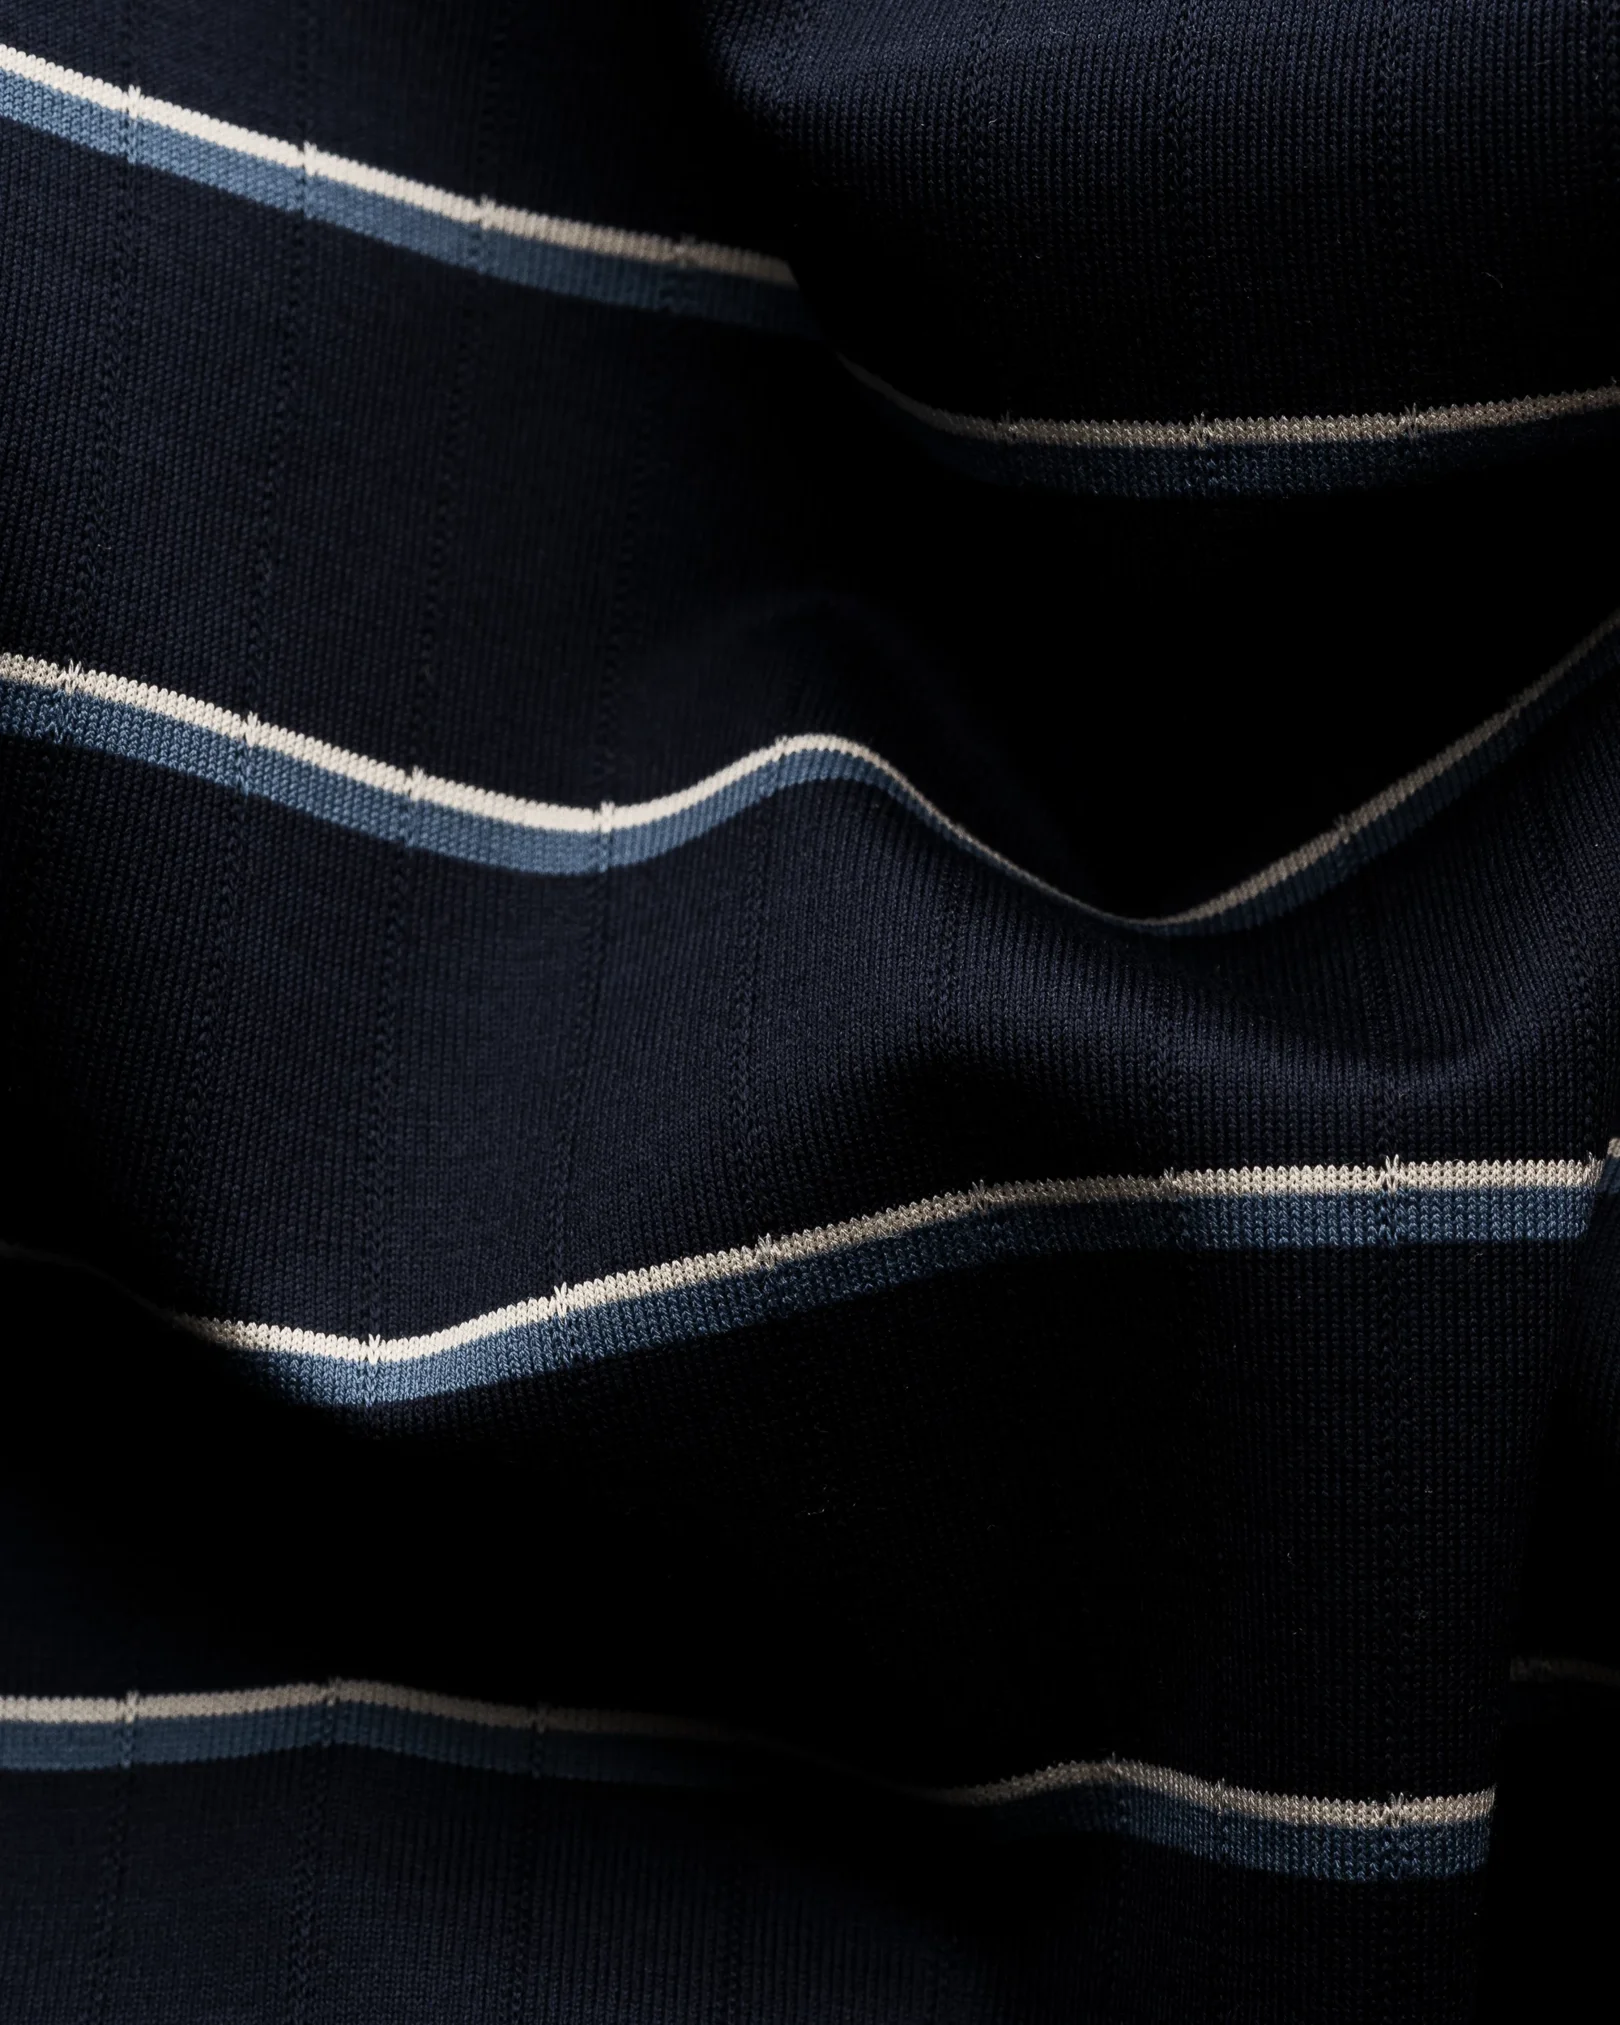 Eton - dark blue knitted collar short sleeve regular fit